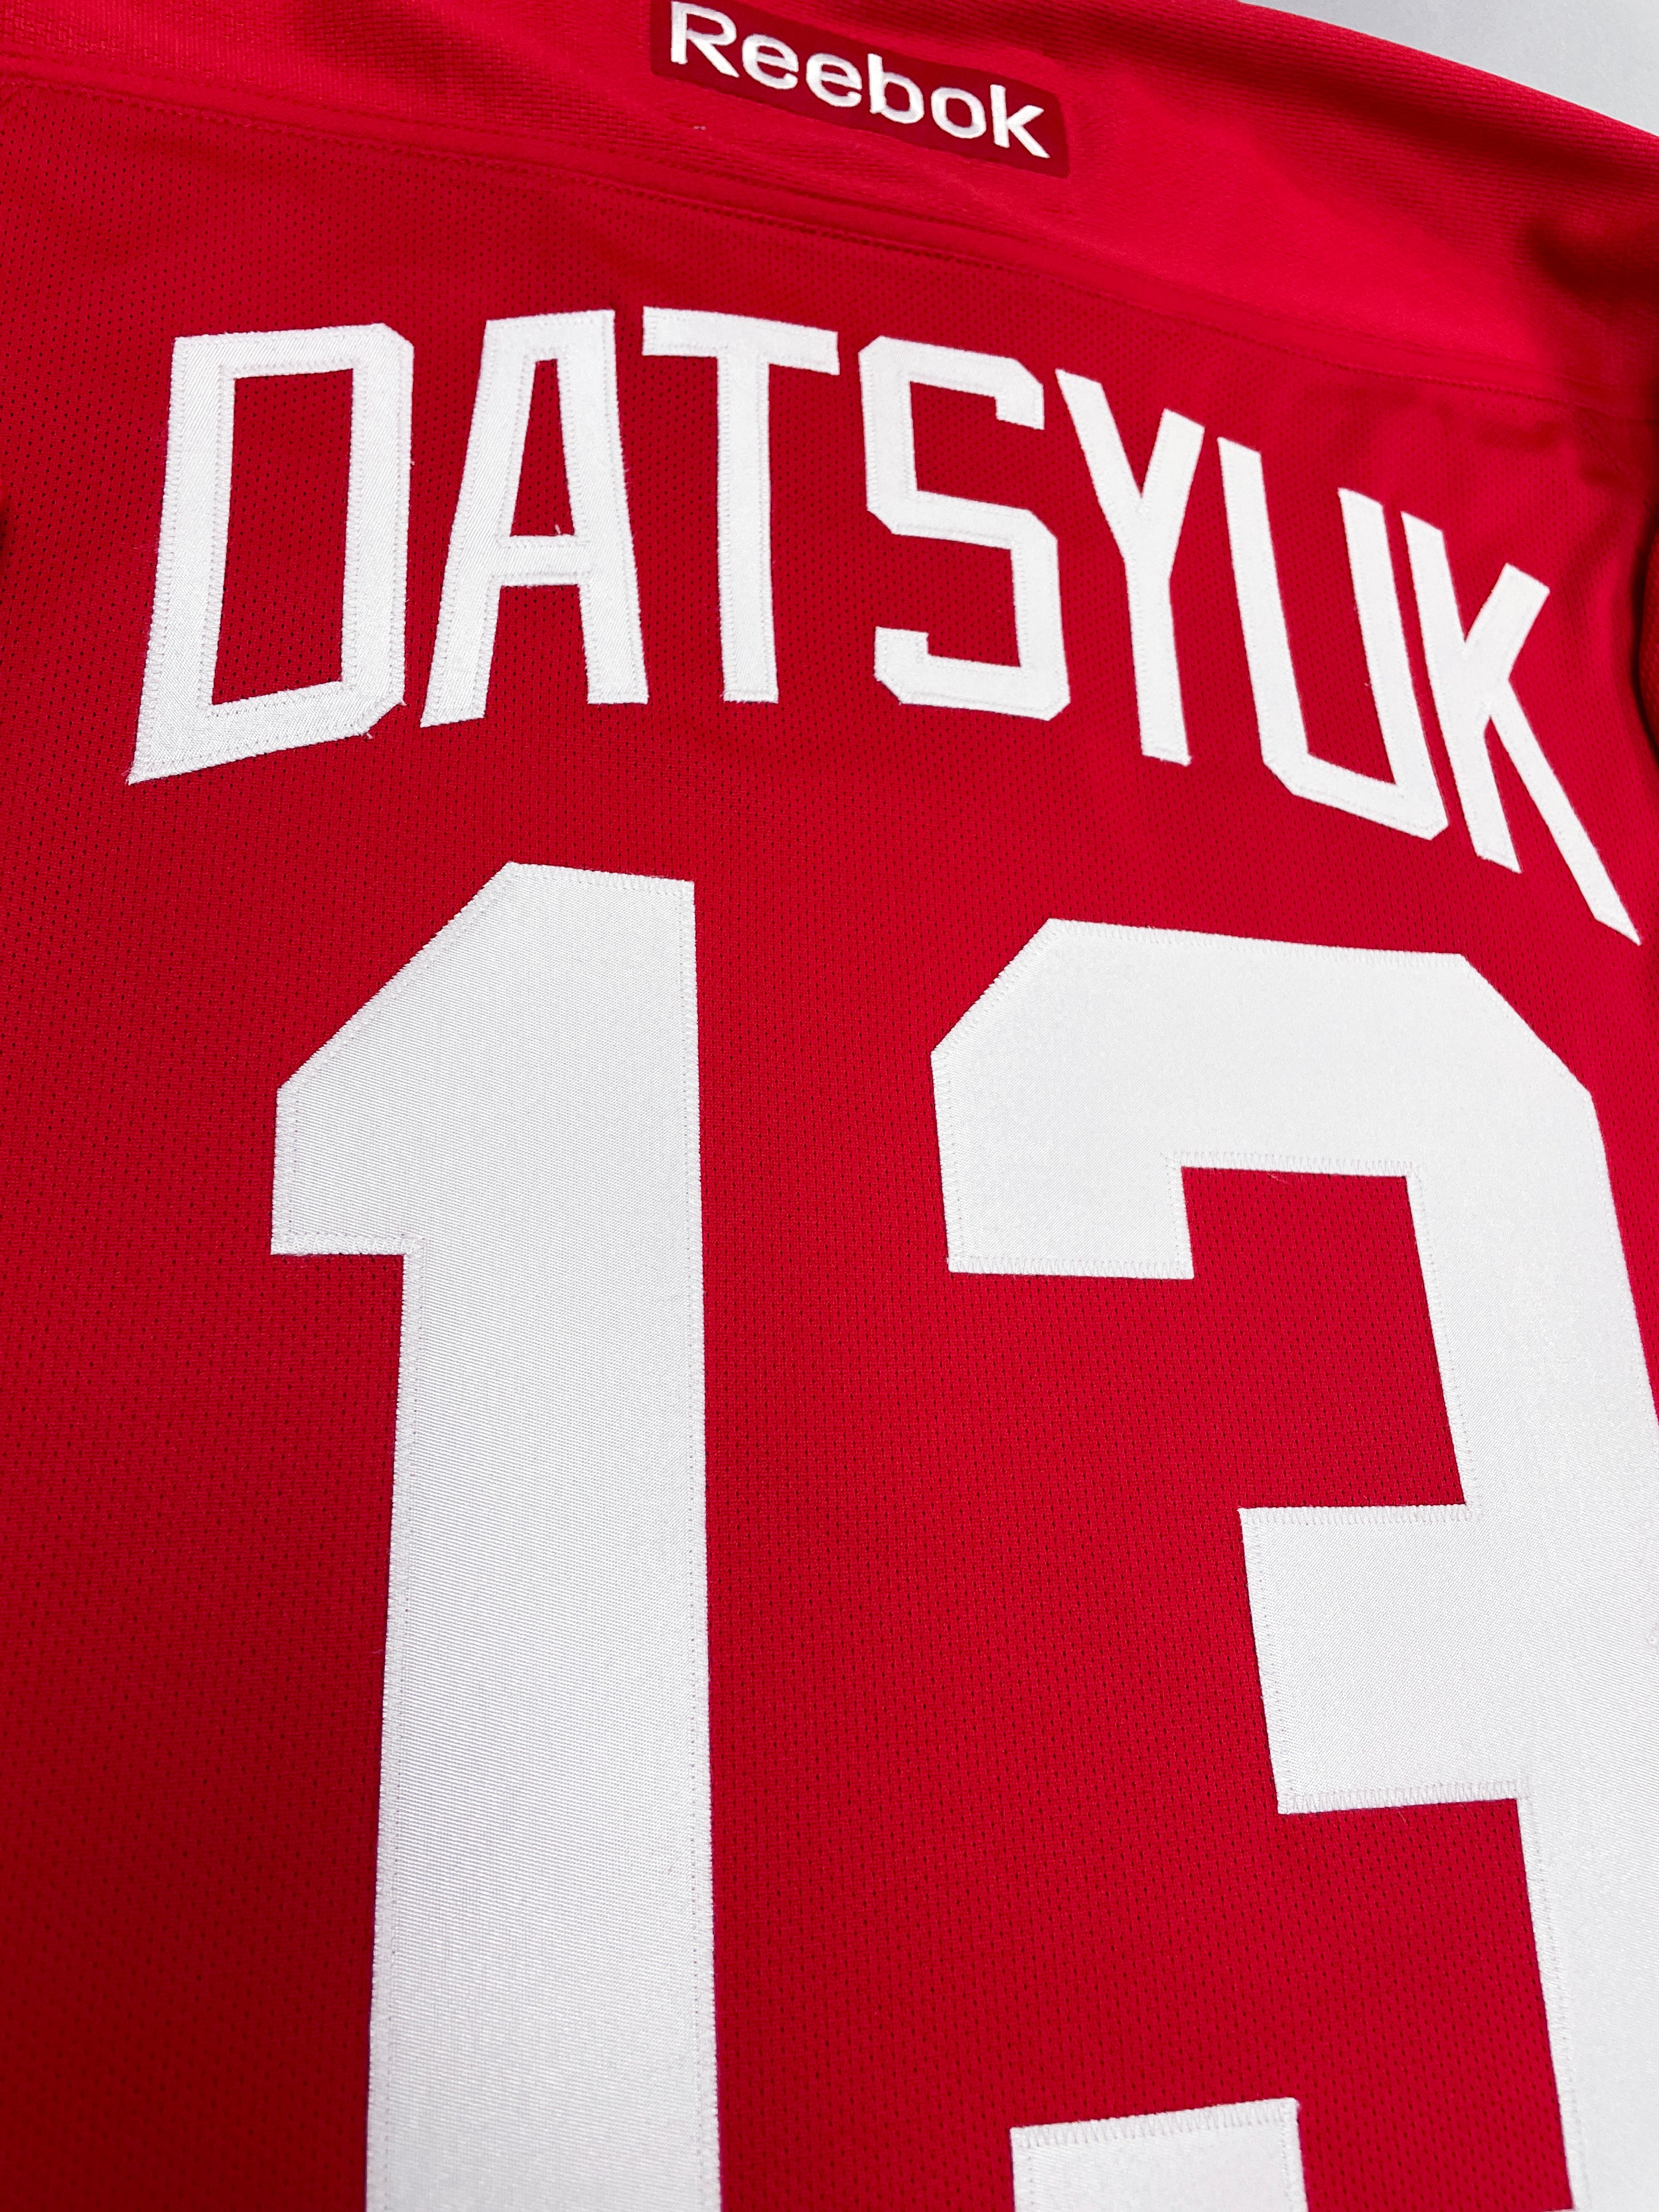 Reebok Detroit Red Wings Pavel Datsyuk Premier Jersey - Away/White